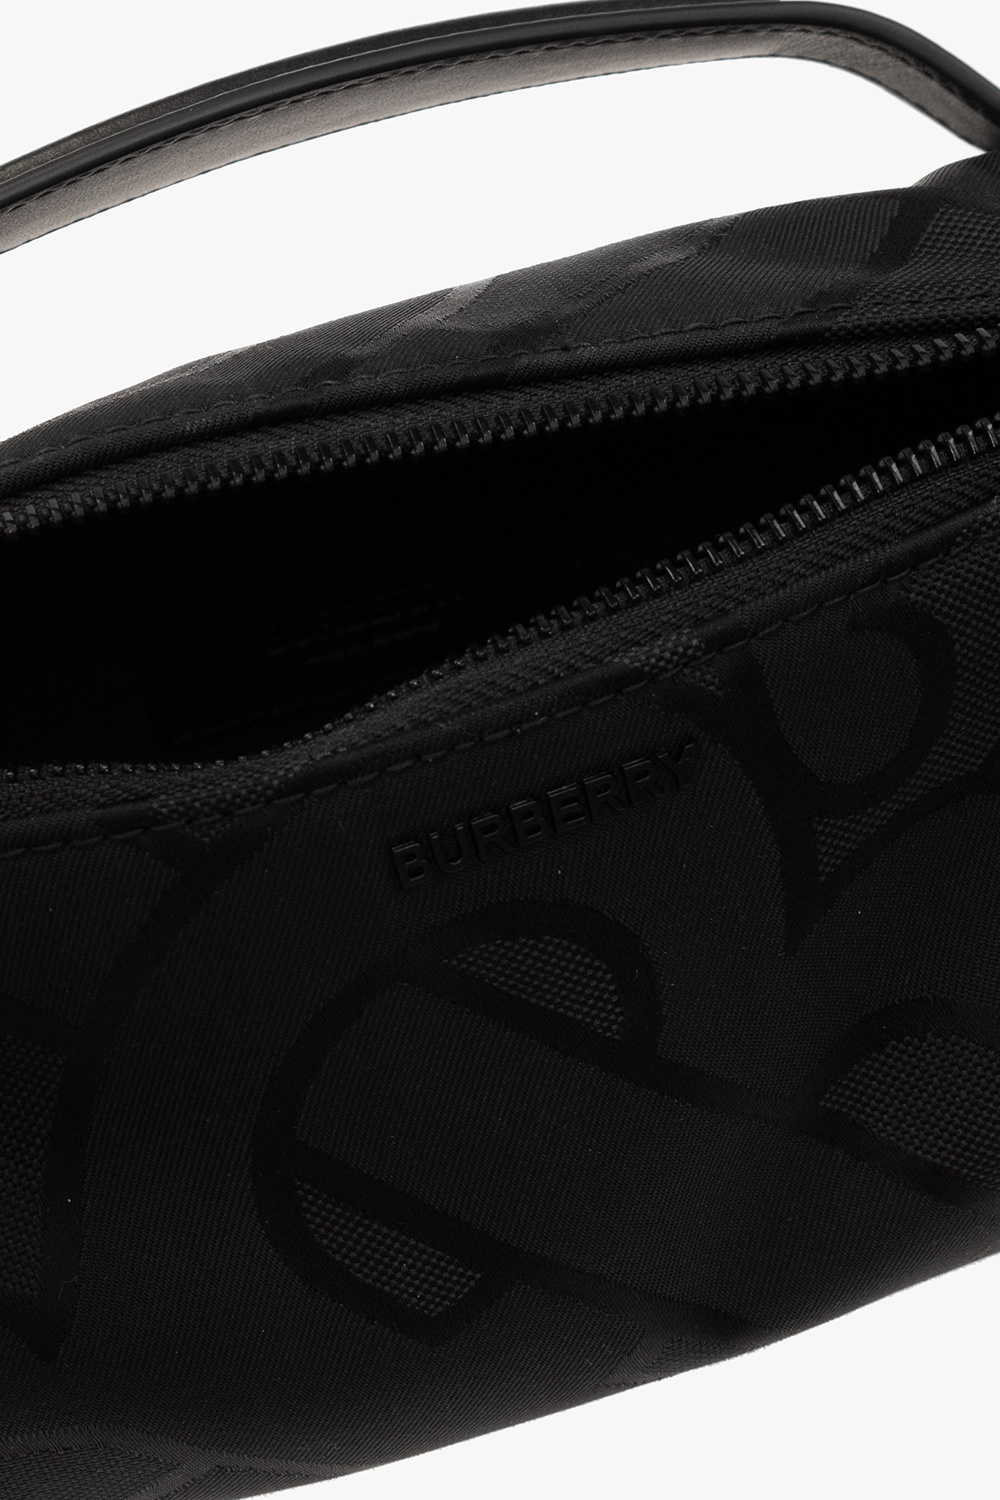 Burberry ‘Sound’ shoulder bag